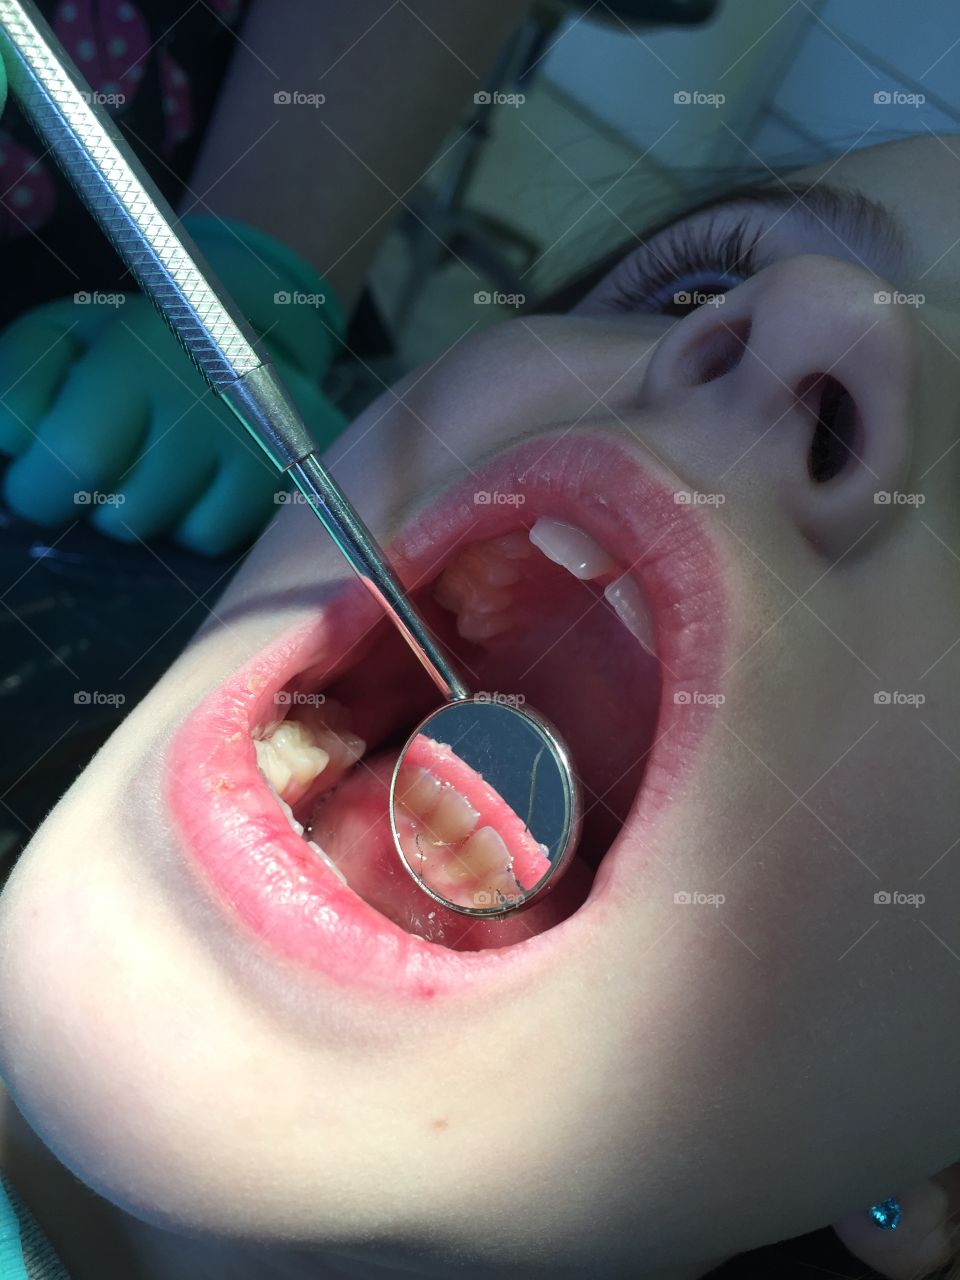 Kids at the dentist 